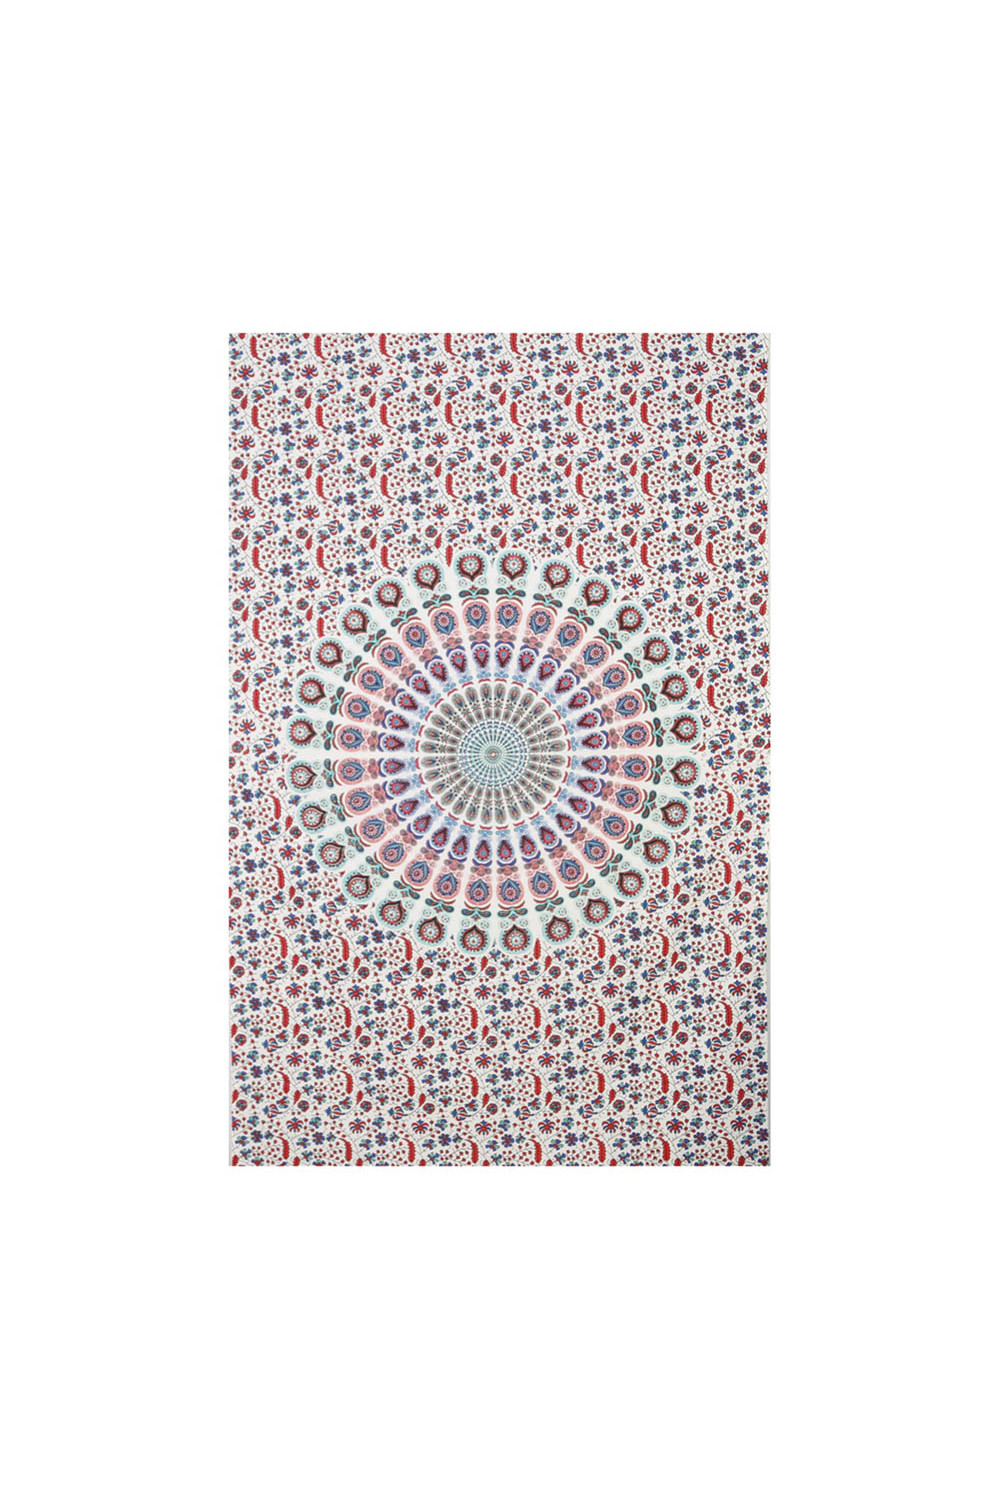 Zest For Life Blue/Purple Plume Mini Tapestry 30x45" 